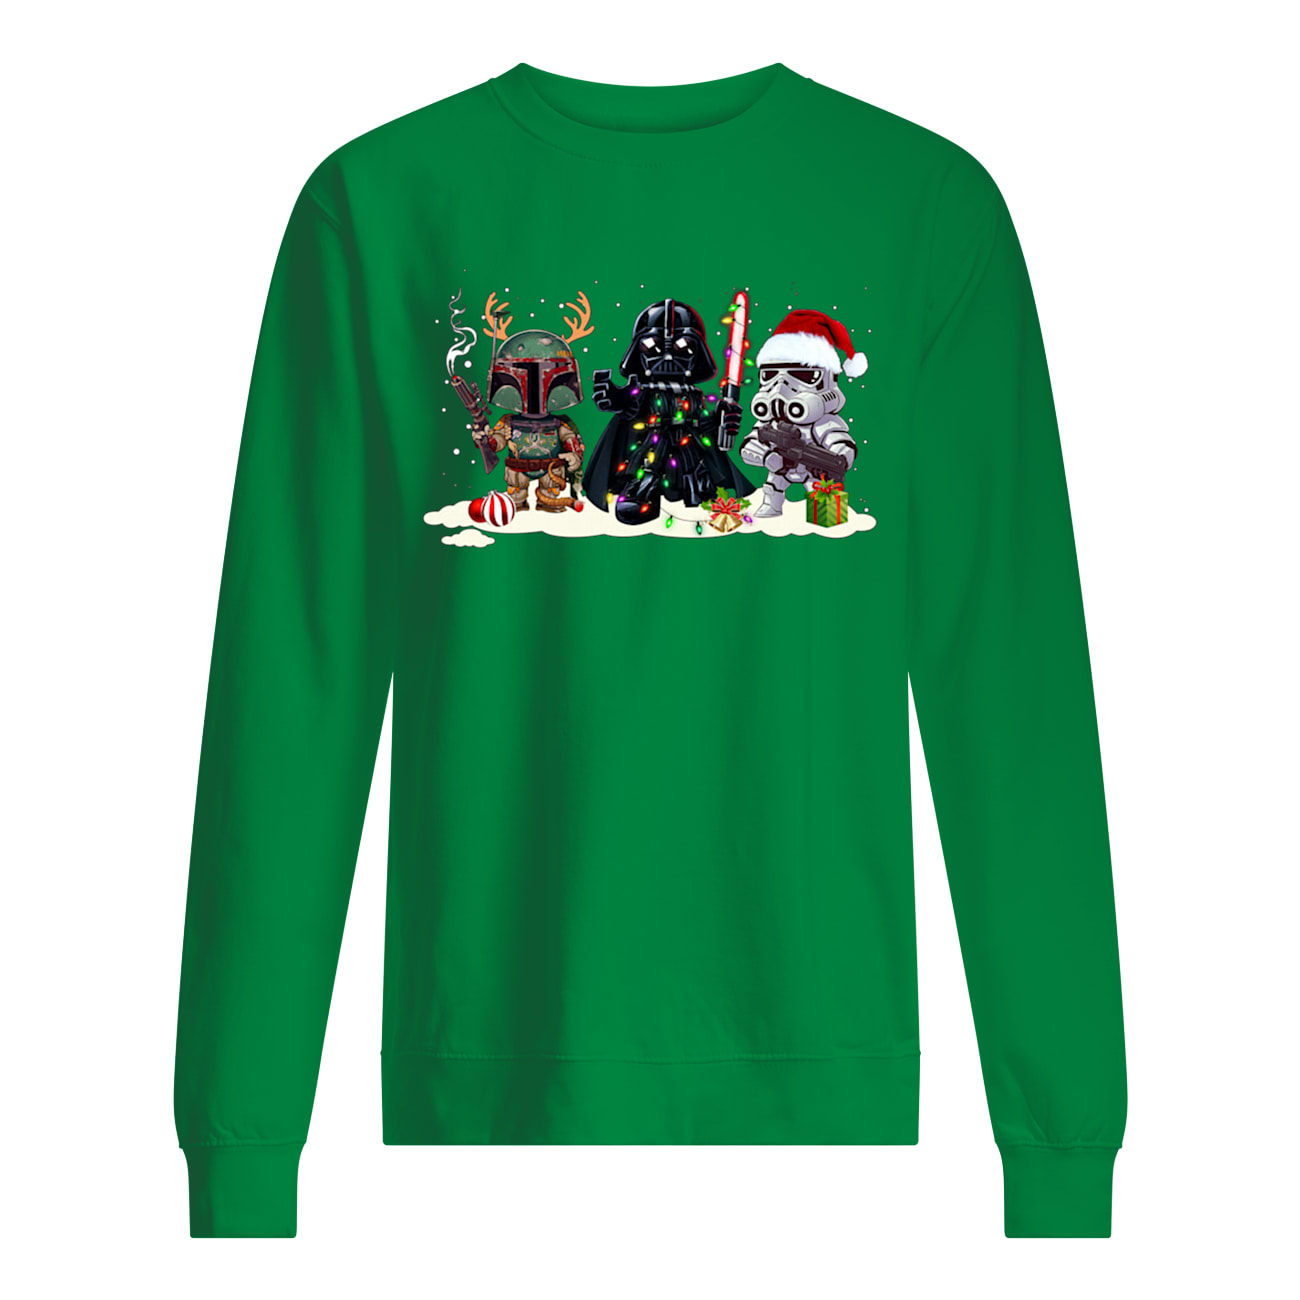 Boba fett darth vader and stormtroopers christmas sweatshirt